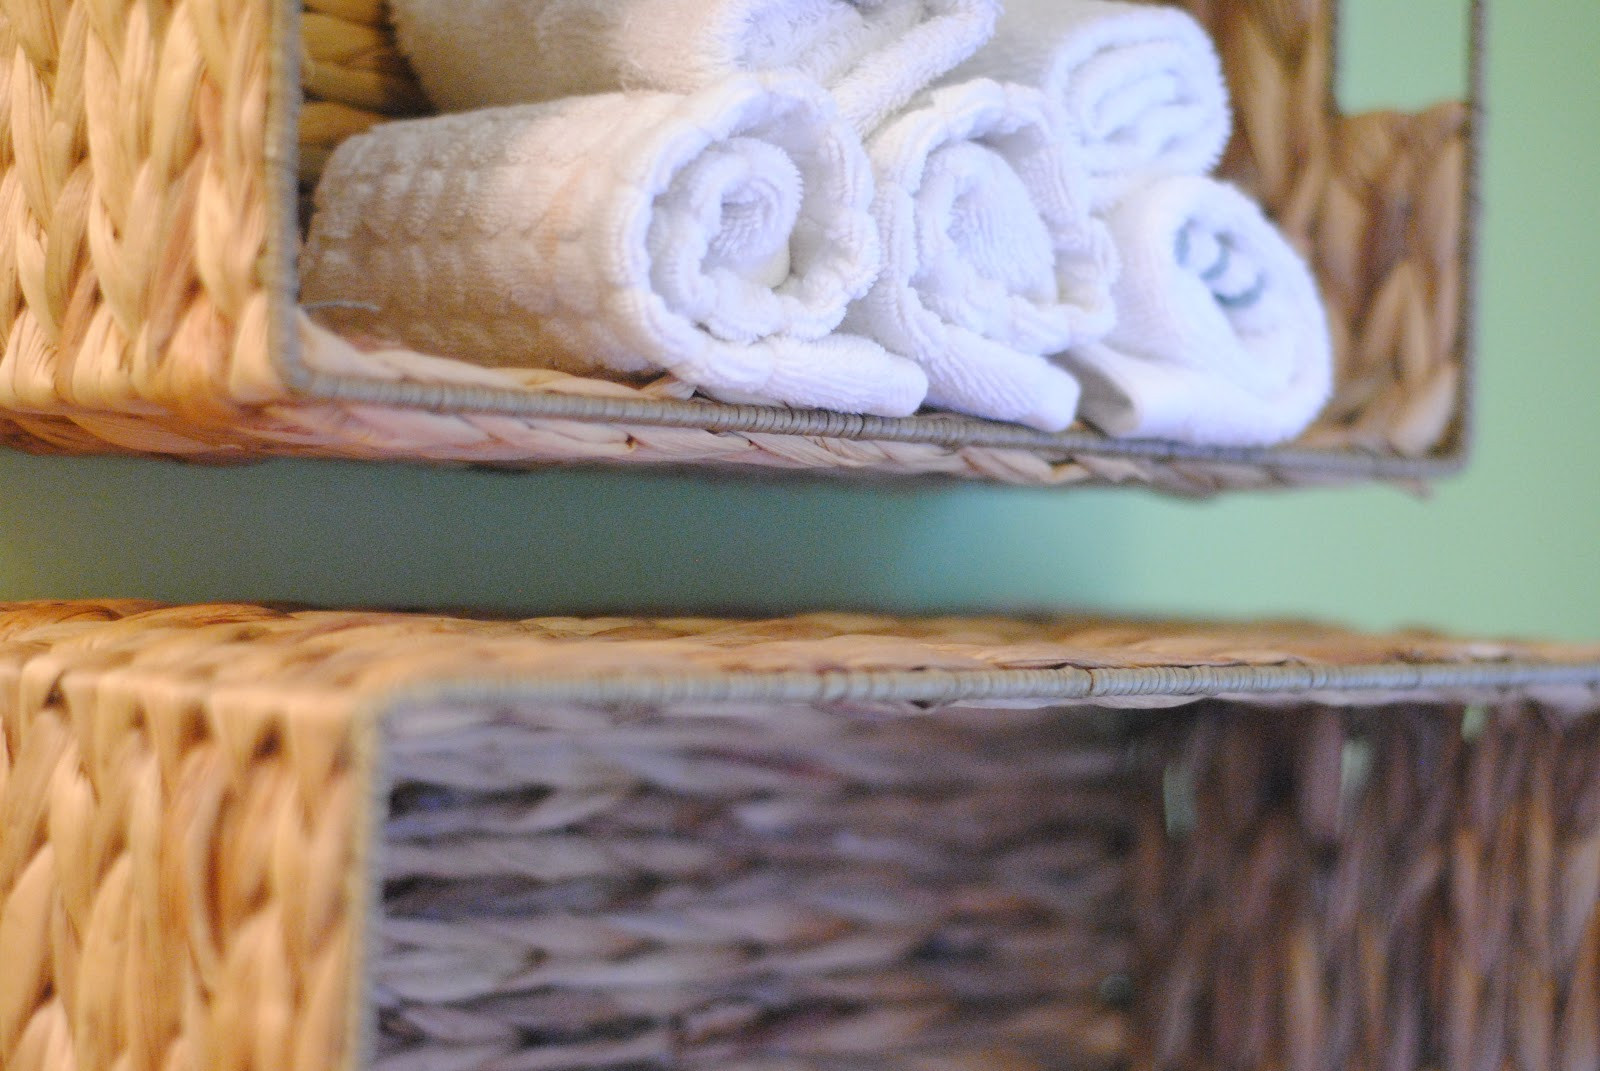 Best ideas about DIY Towel Storage
. Save or Pin DIY Bathroom Towel Storage in Under 5 Minutes Now.